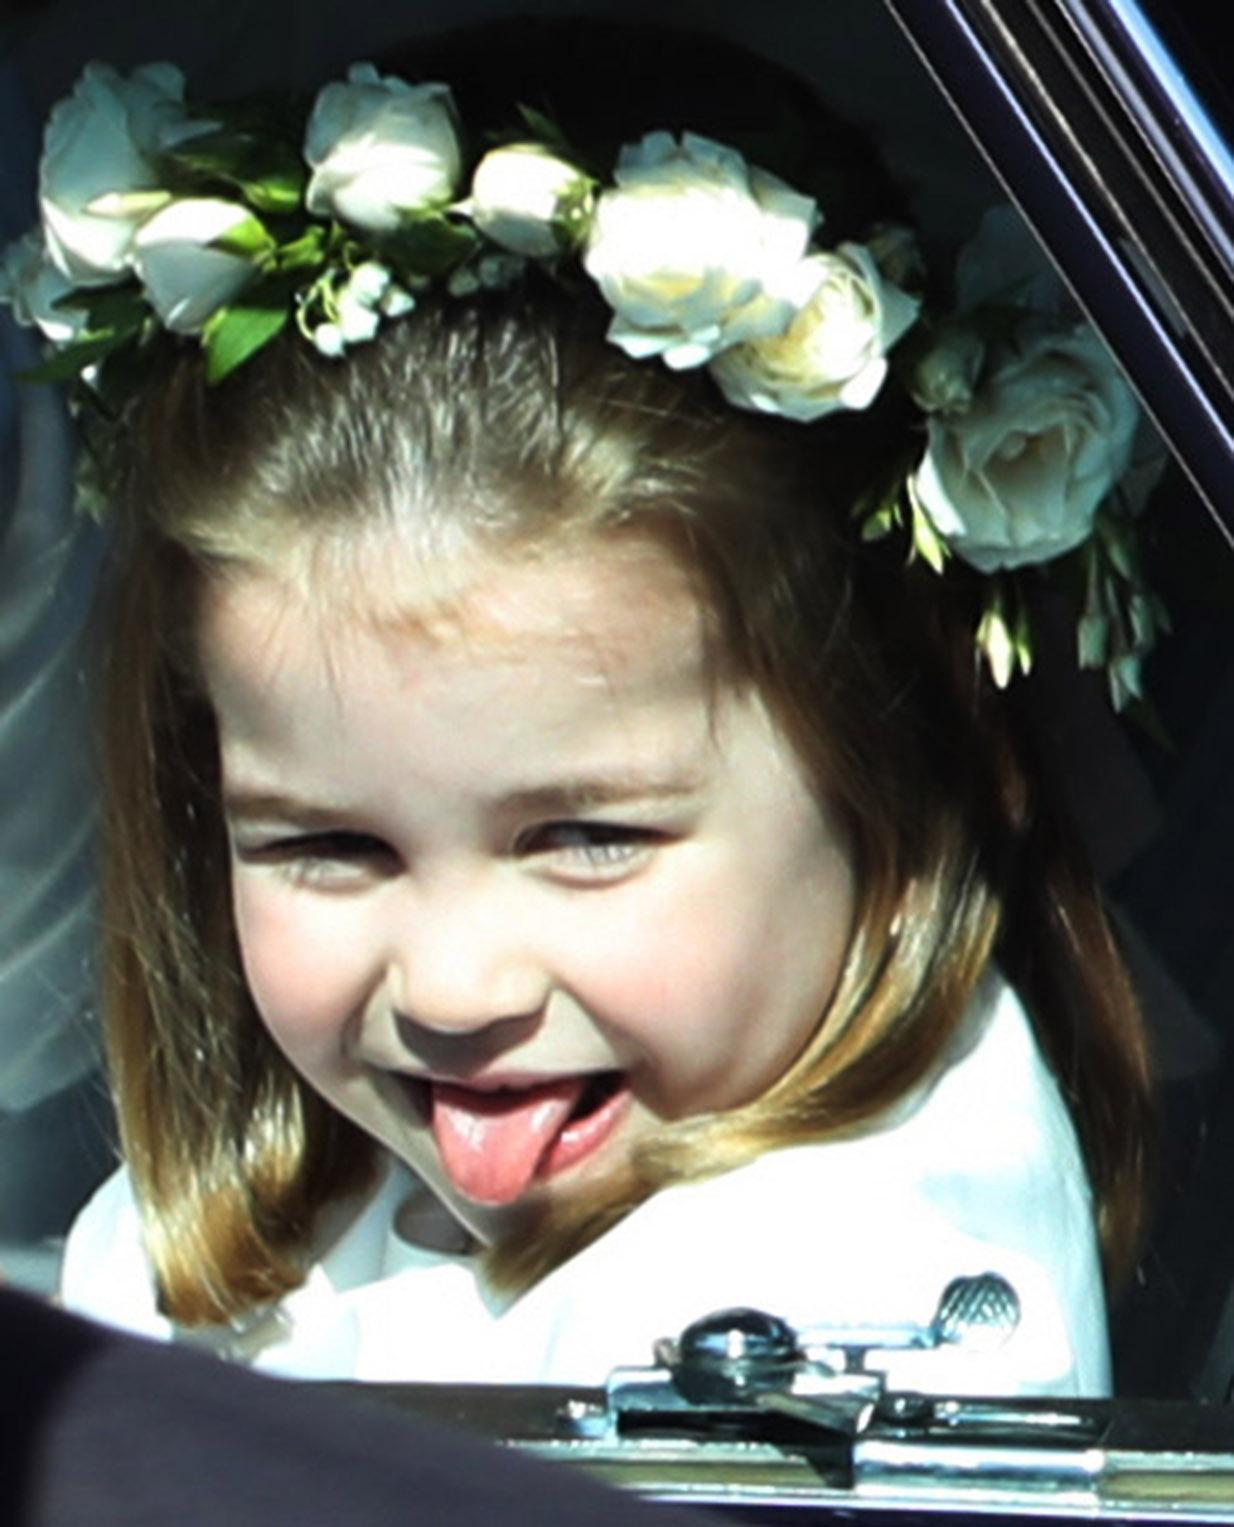 Meghan Markle's comforting smile at niece Princess Charlotte